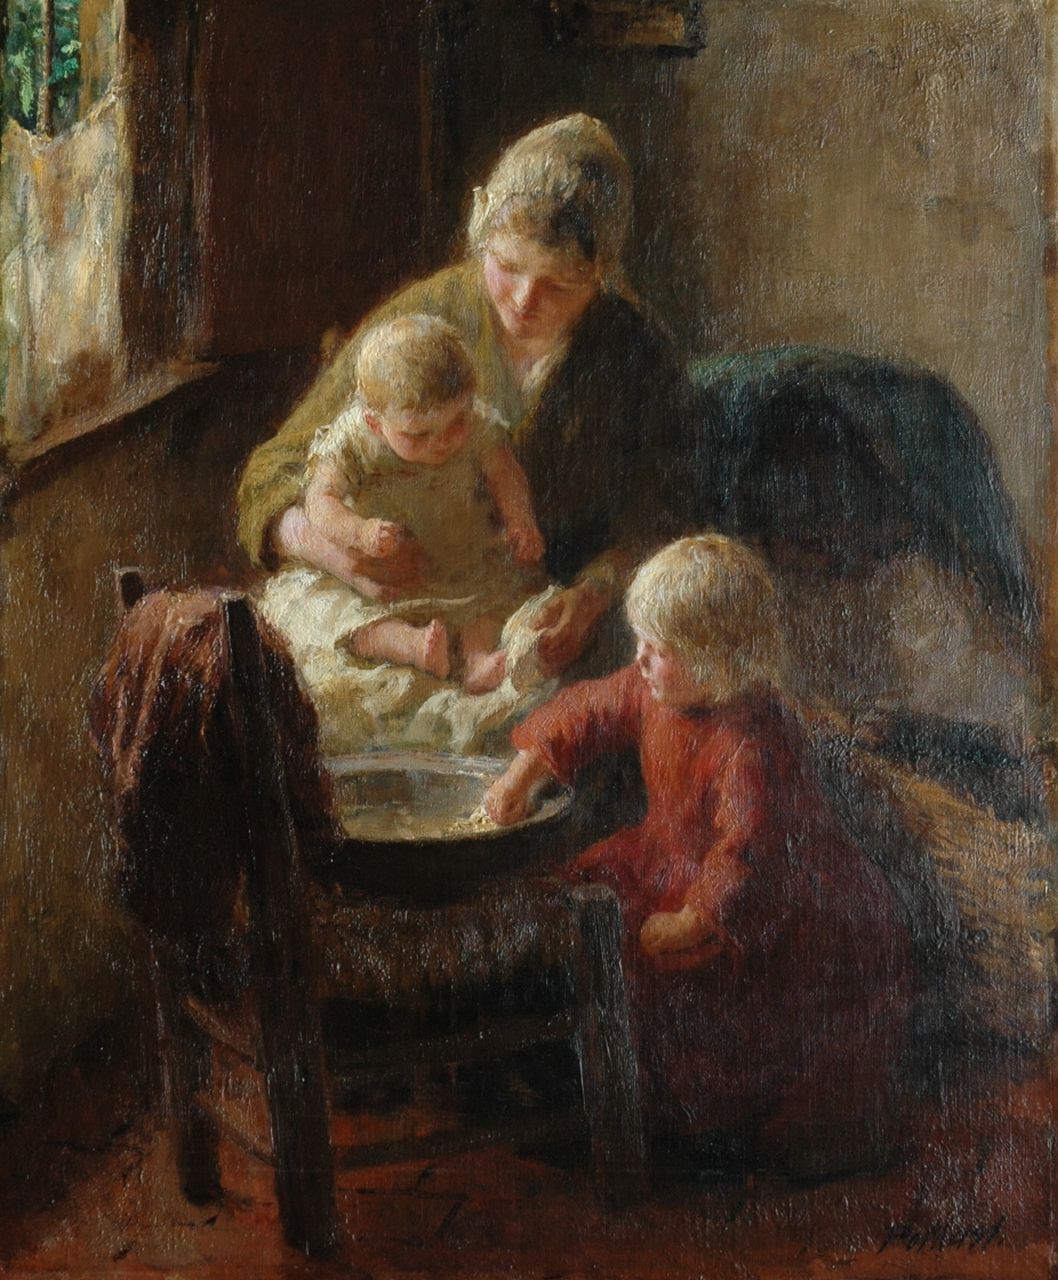 Pothast B.J.C.  | 'Bernard' Jean Corneille Pothast, Washing the baby together, Öl auf Leinwand 55,1 x 45,7 cm, signed l.r.